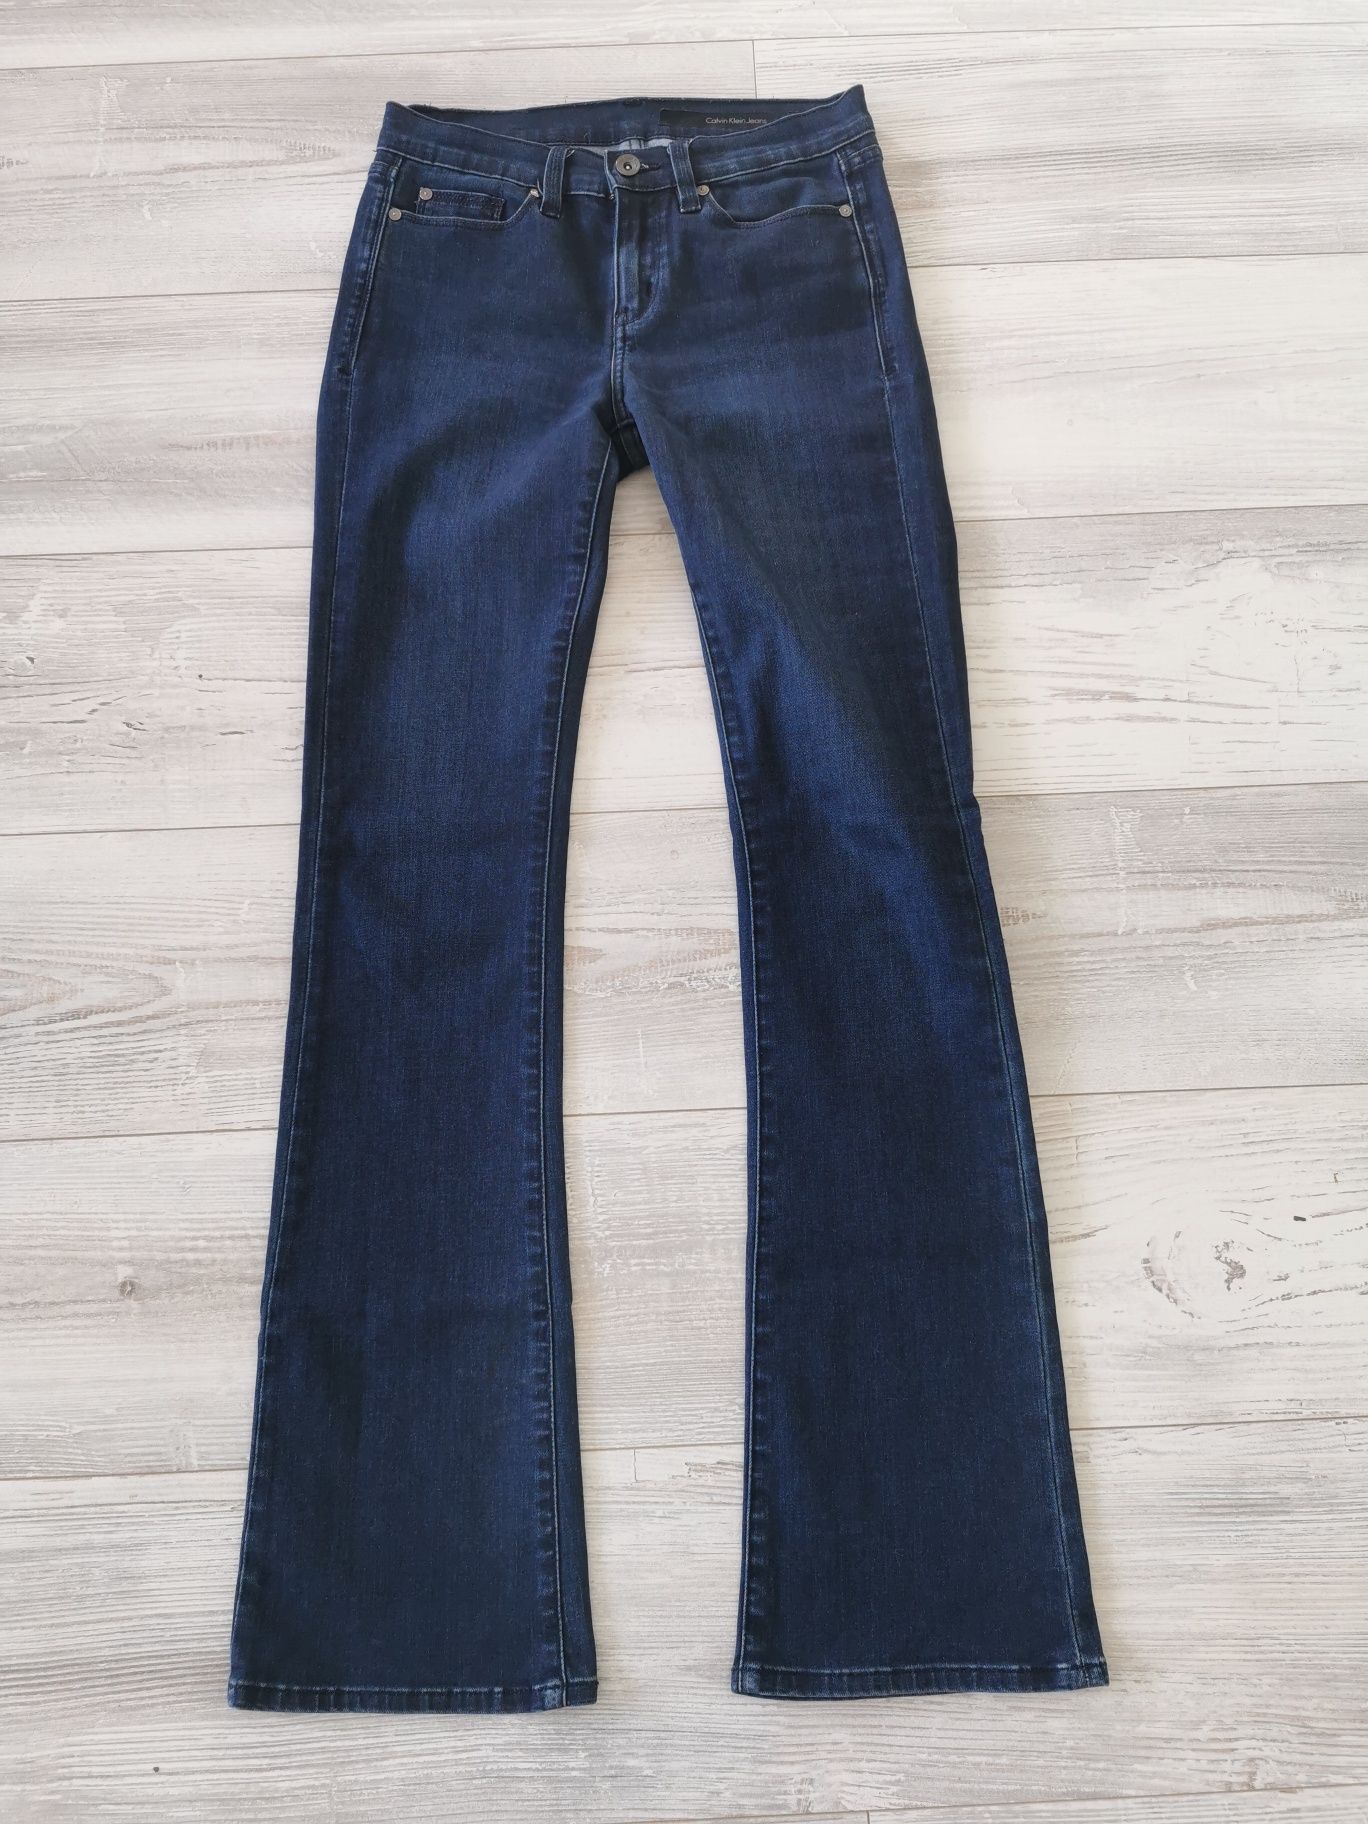 Spodnie jeansy damskie granat S /M Calvin Klein nowe